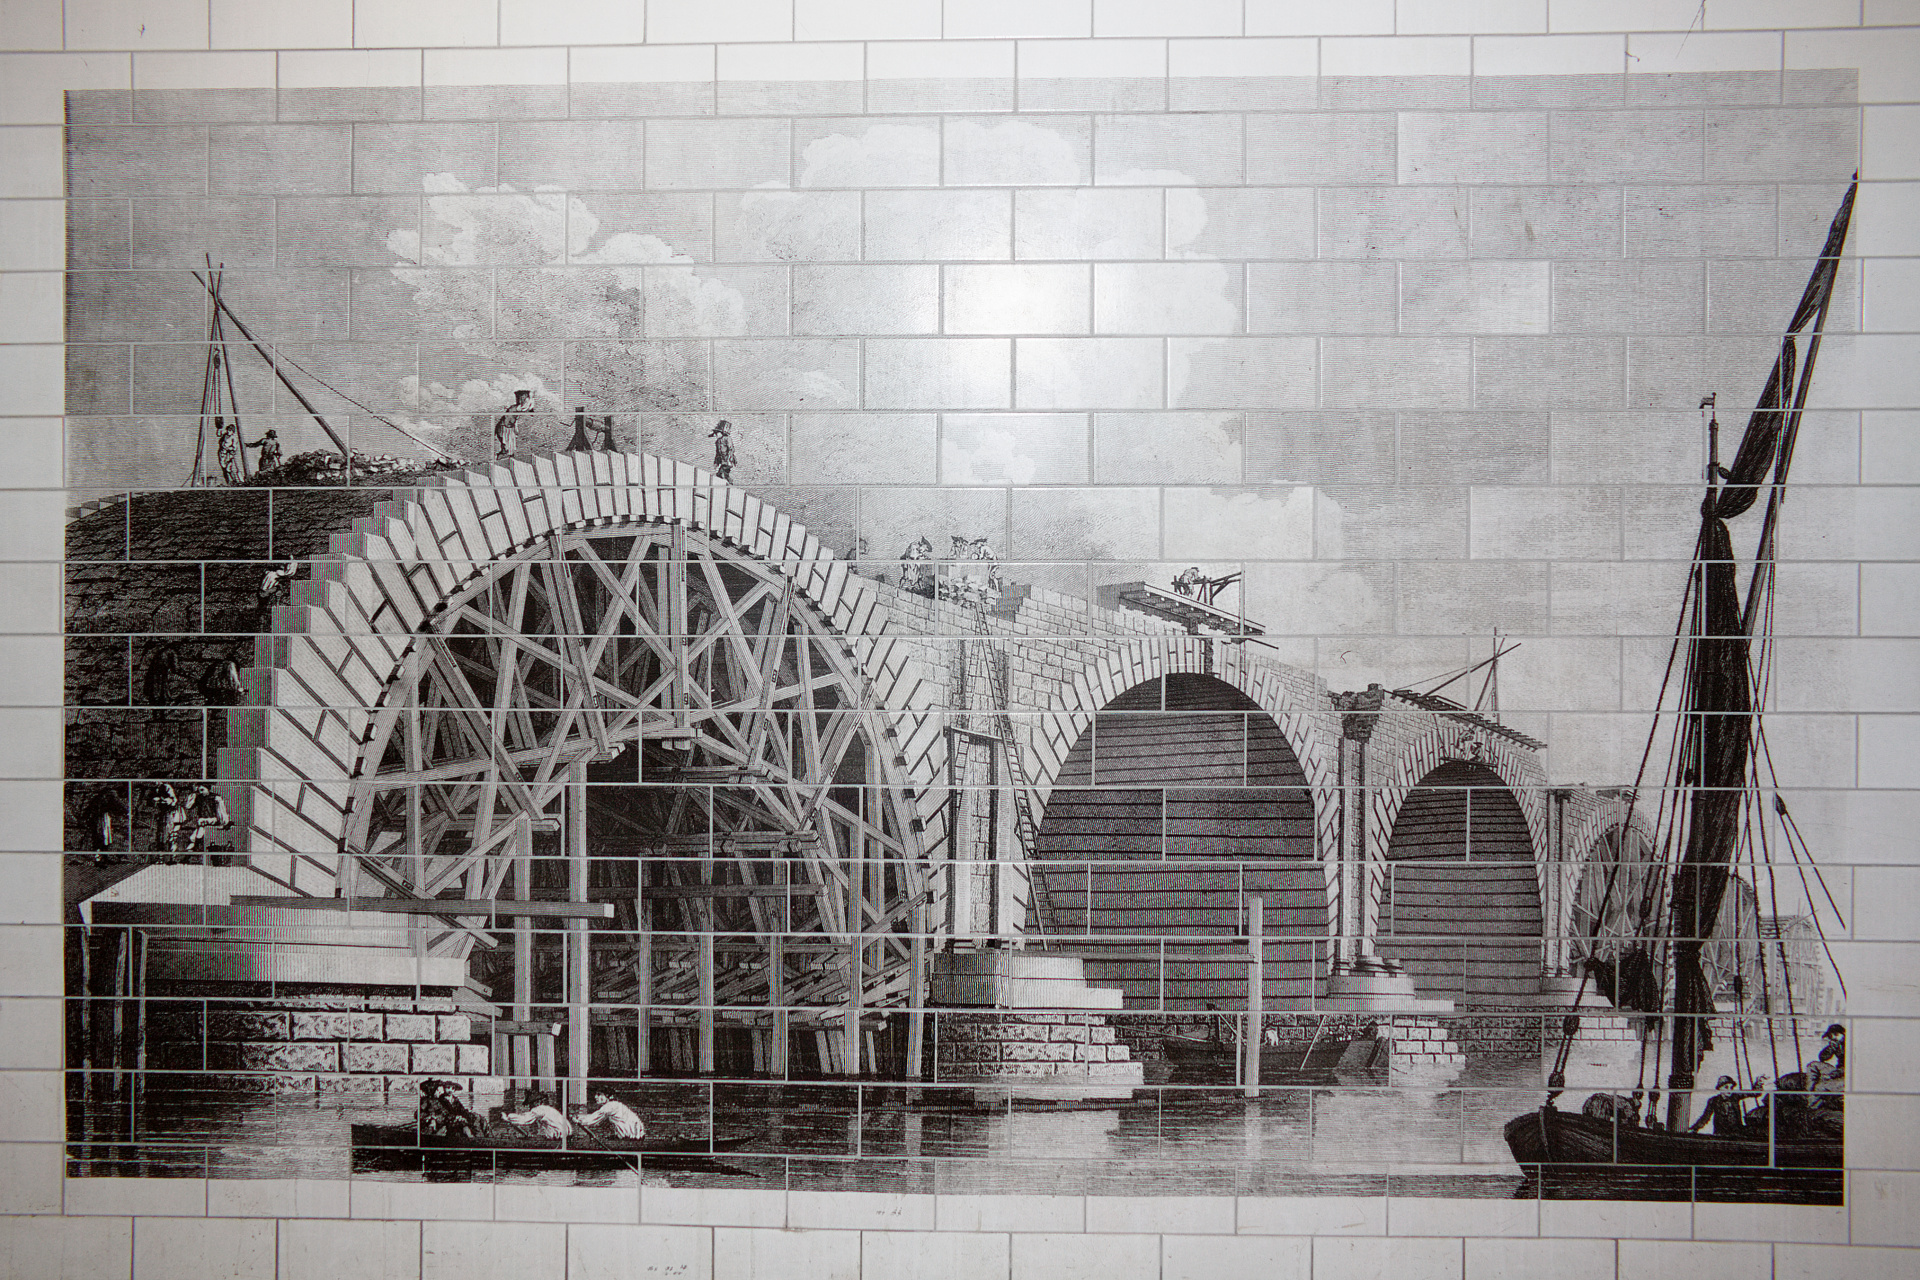 Painted tiles at Blackfriars Bridge underpass (Travels » London » London at Day)